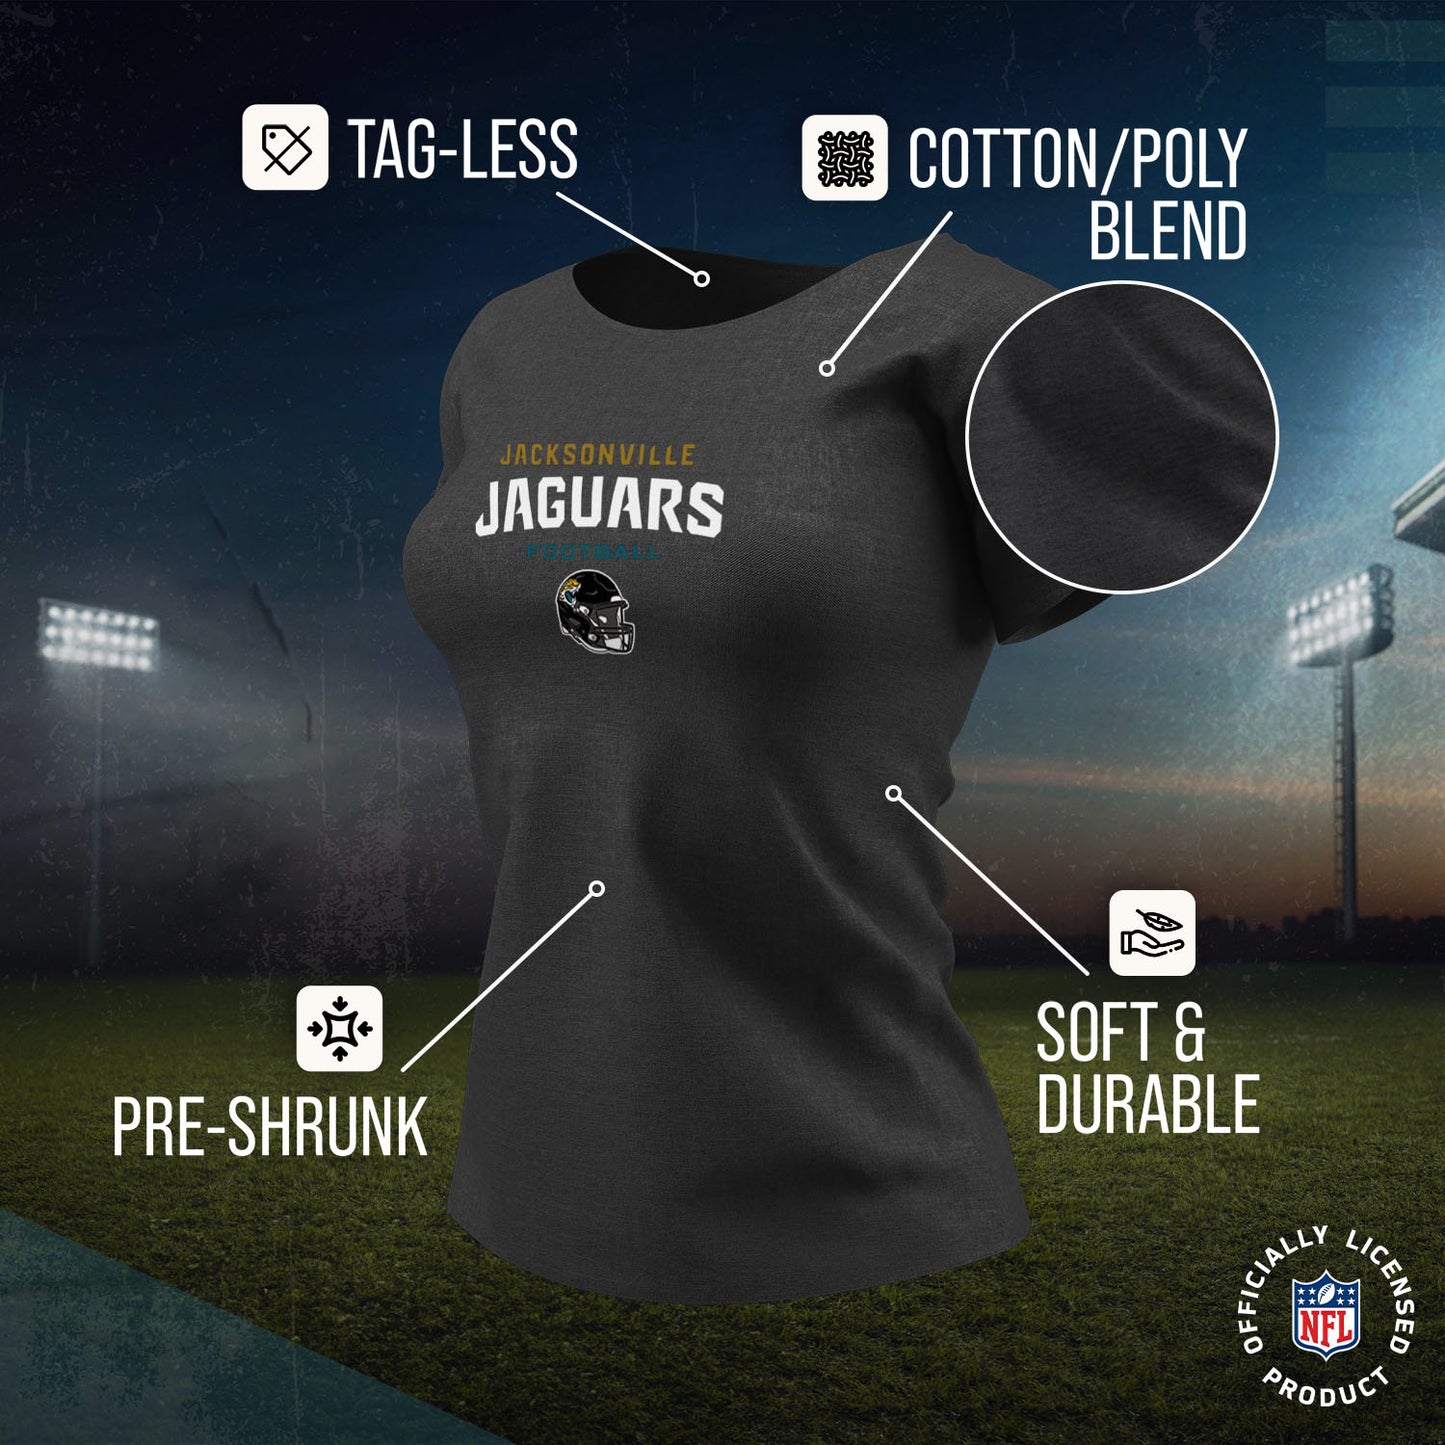 Jacksonville Jaguars Women's NFL Football Helmet Short Sleeve Tagless T-Shirt - Charcoal